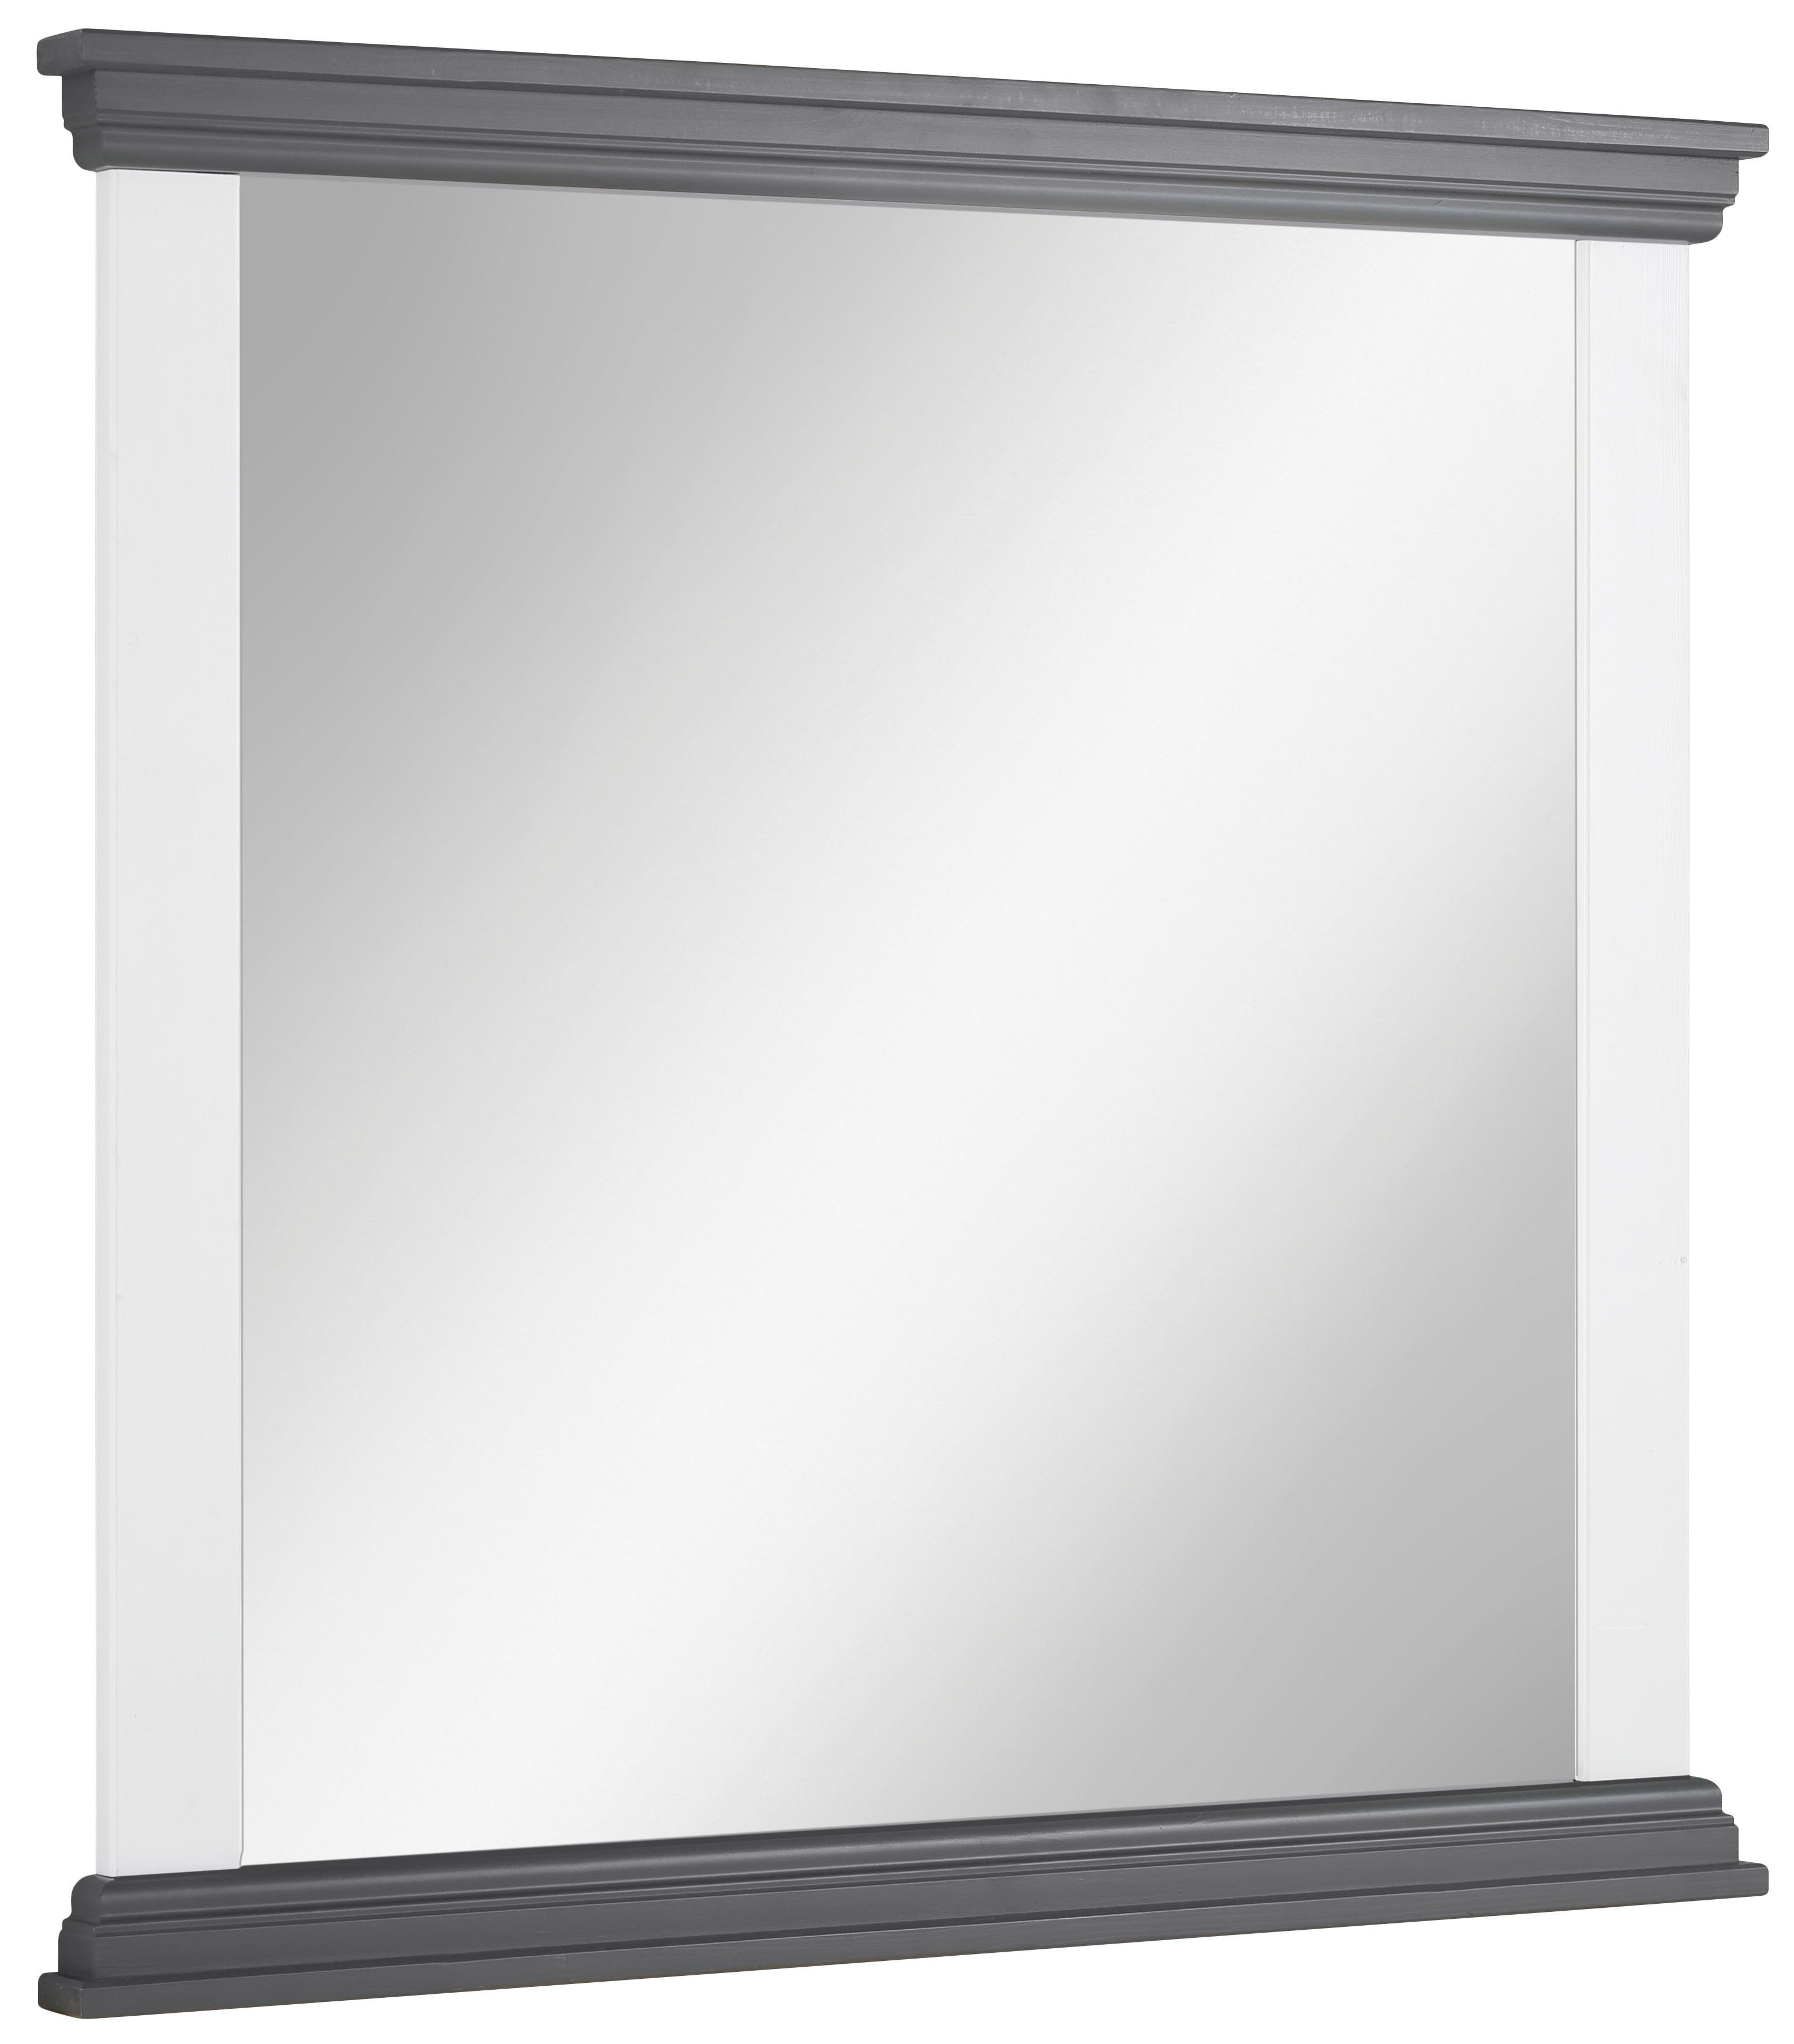 affaire massiver | Rahmen Kiefer Home Garderobenspiegel aus weiß/grau Basilico, weiß/grau